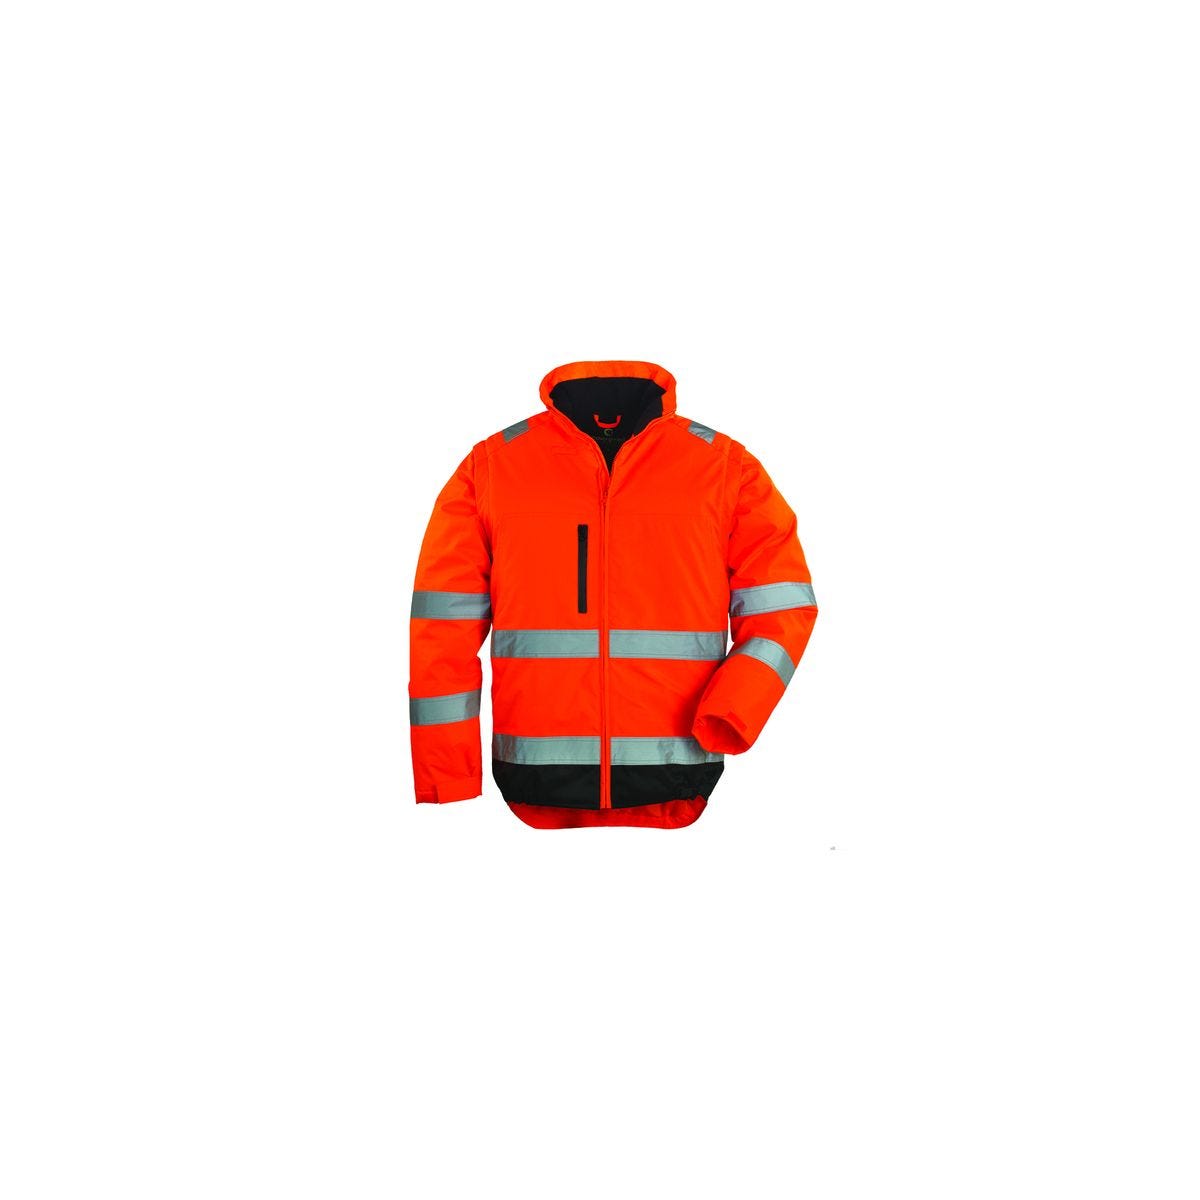 HI-WAY Xtra Veste 2/1, orange HV, Polyester Oxford 300D - COVERGUARD - Taille S 0